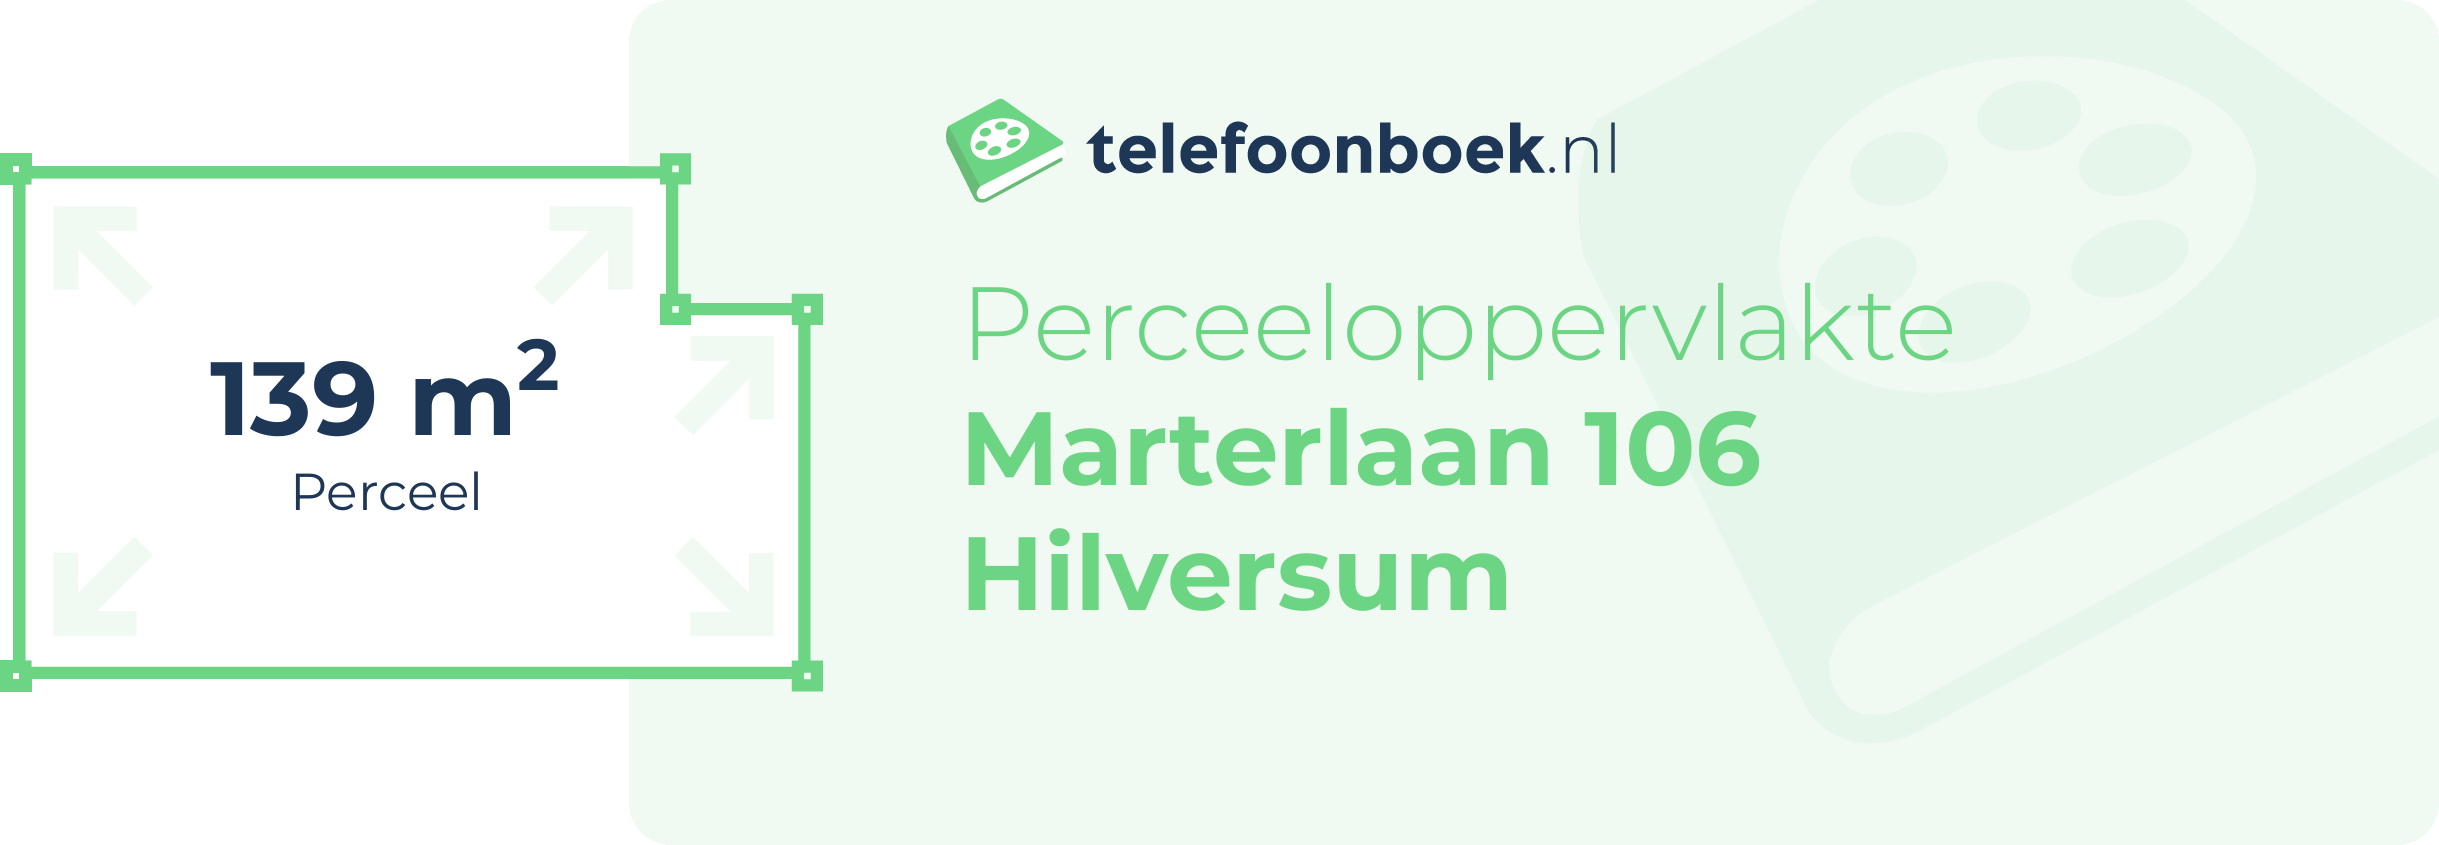 Perceeloppervlakte Marterlaan 106 Hilversum